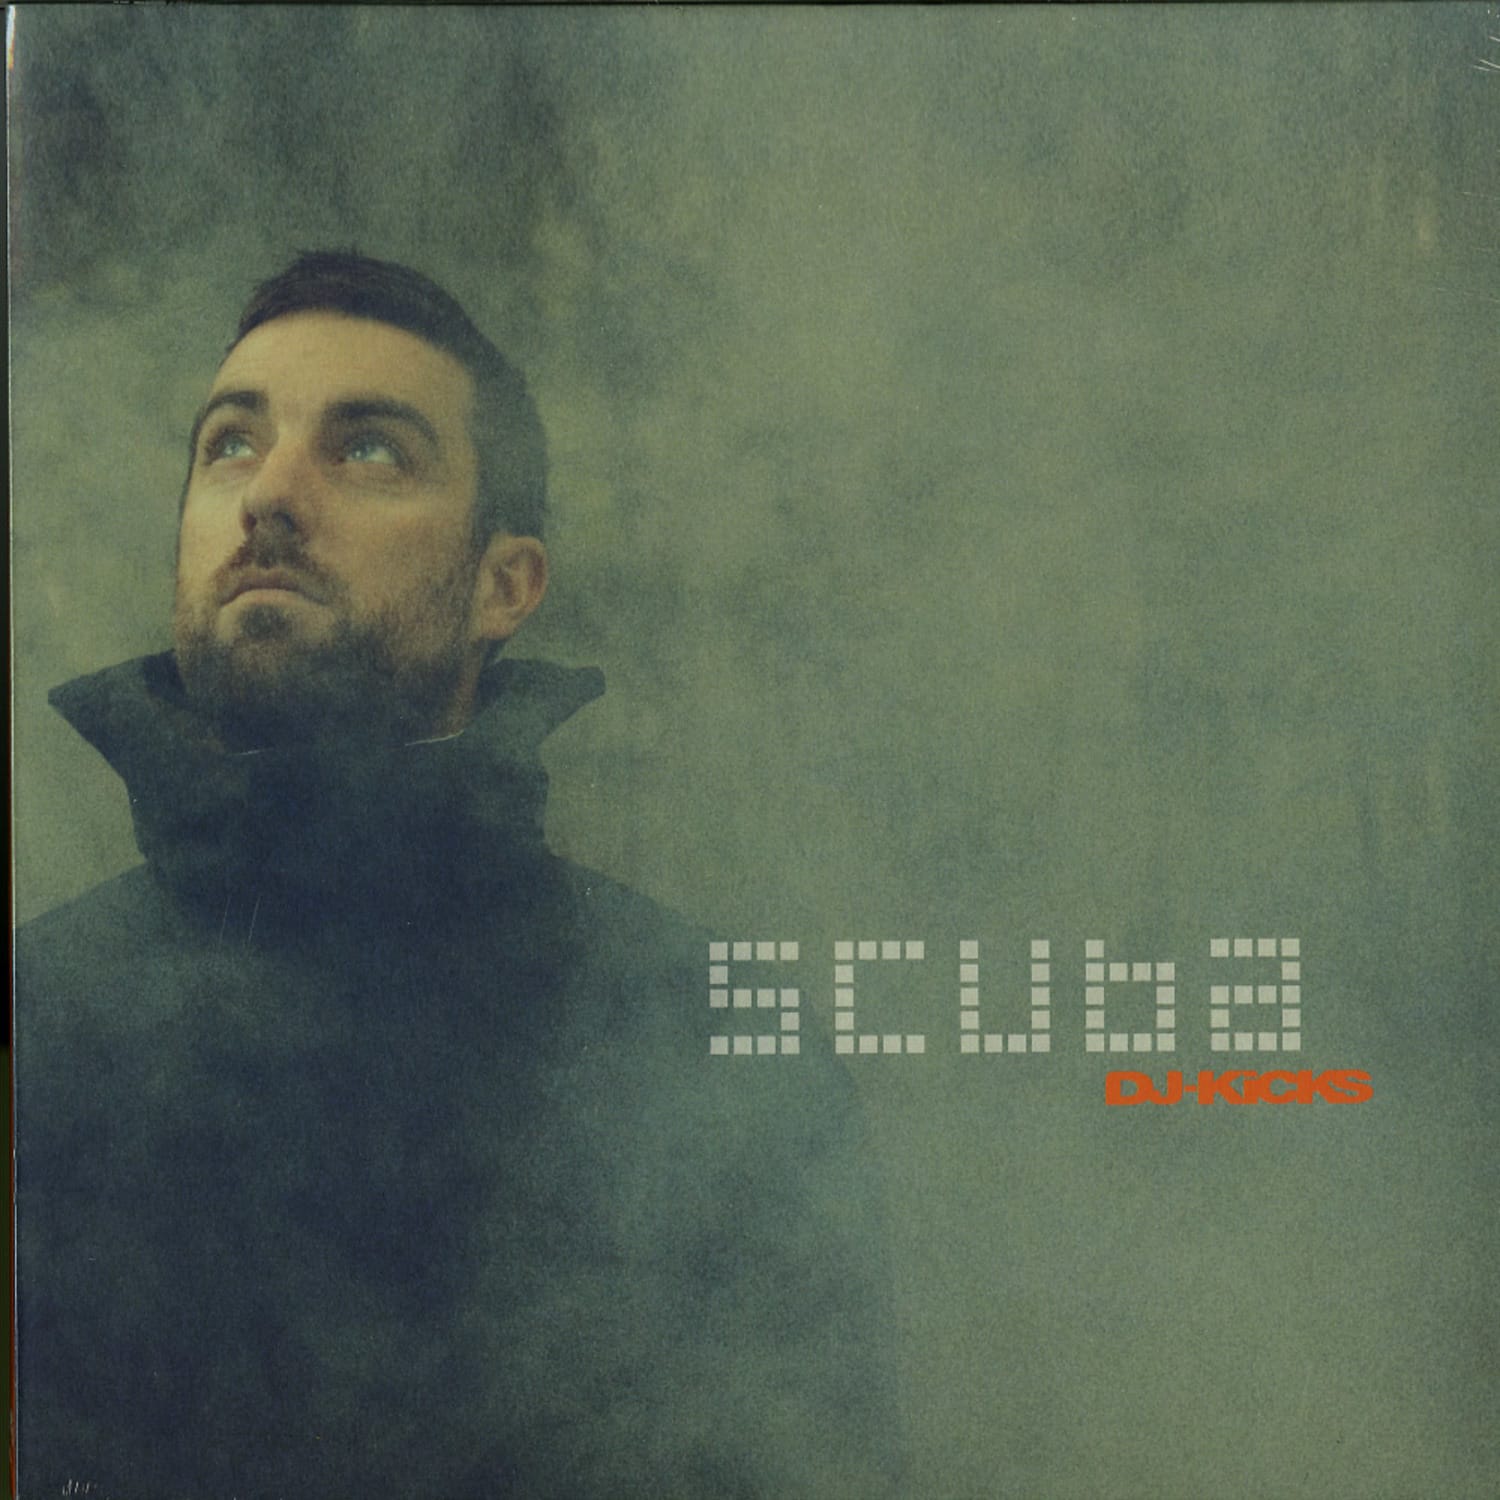 Scuba - DJ KICKS 